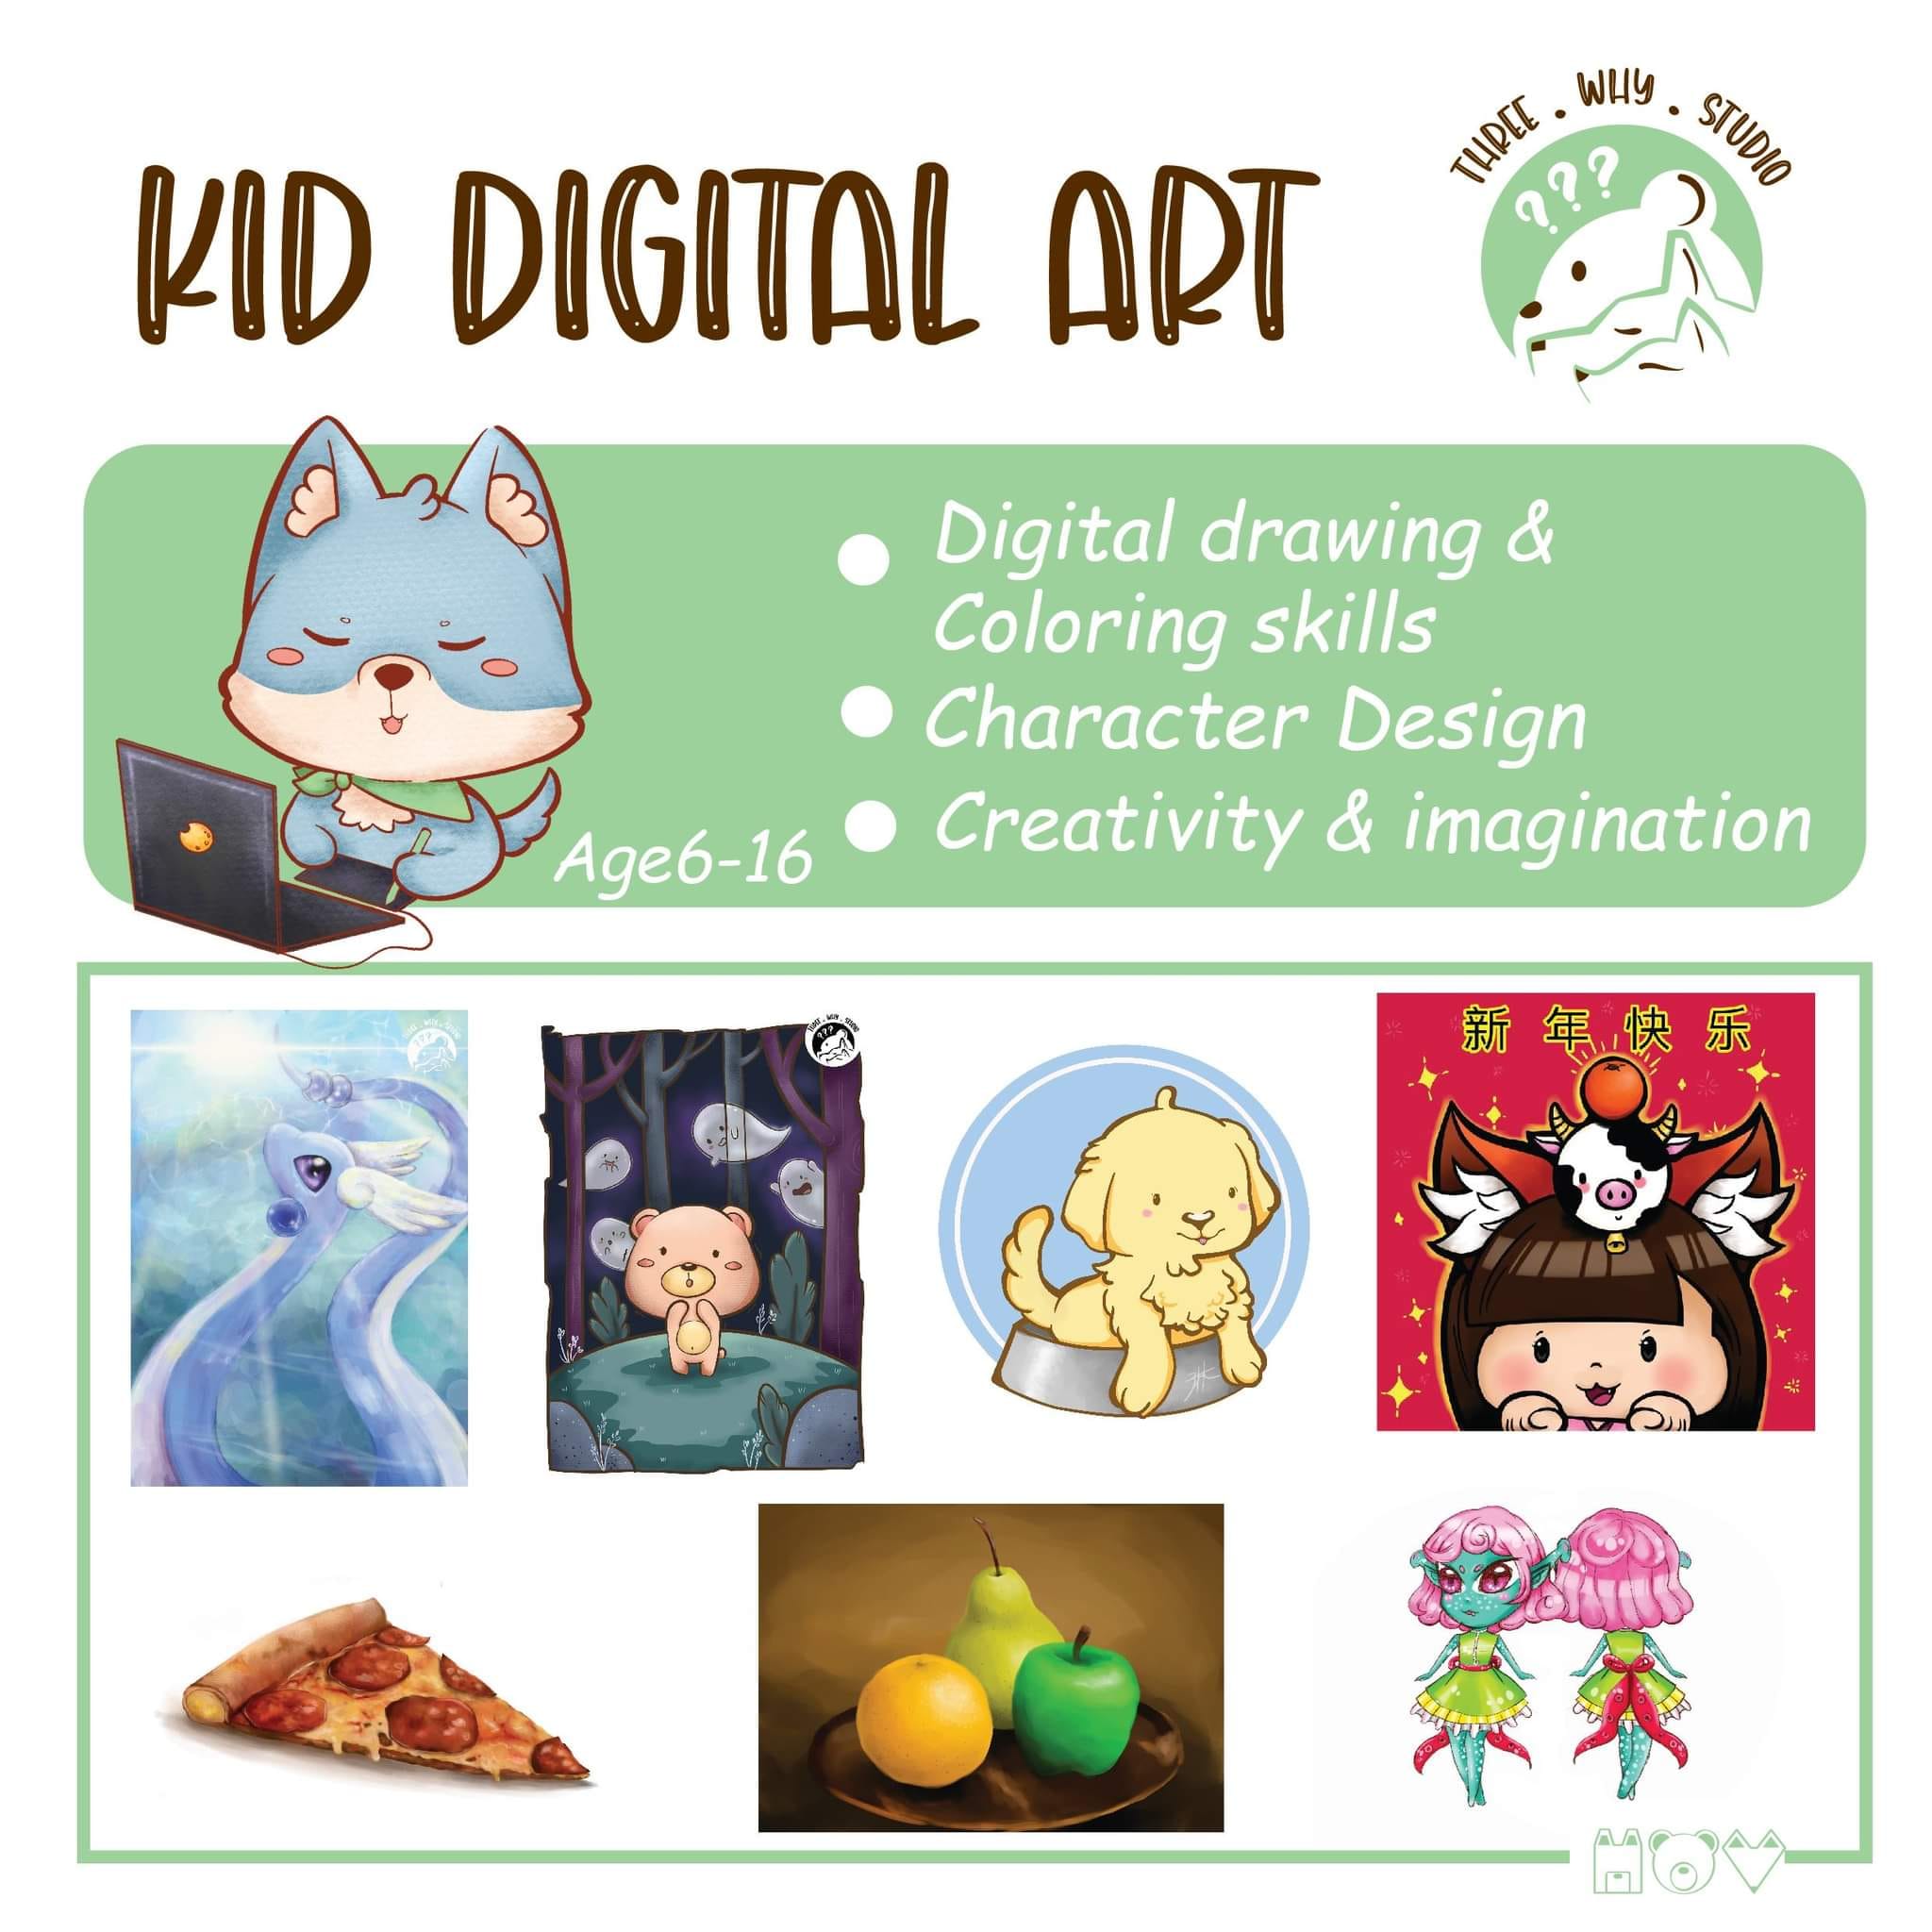 Three Why Kid Digital Art Program